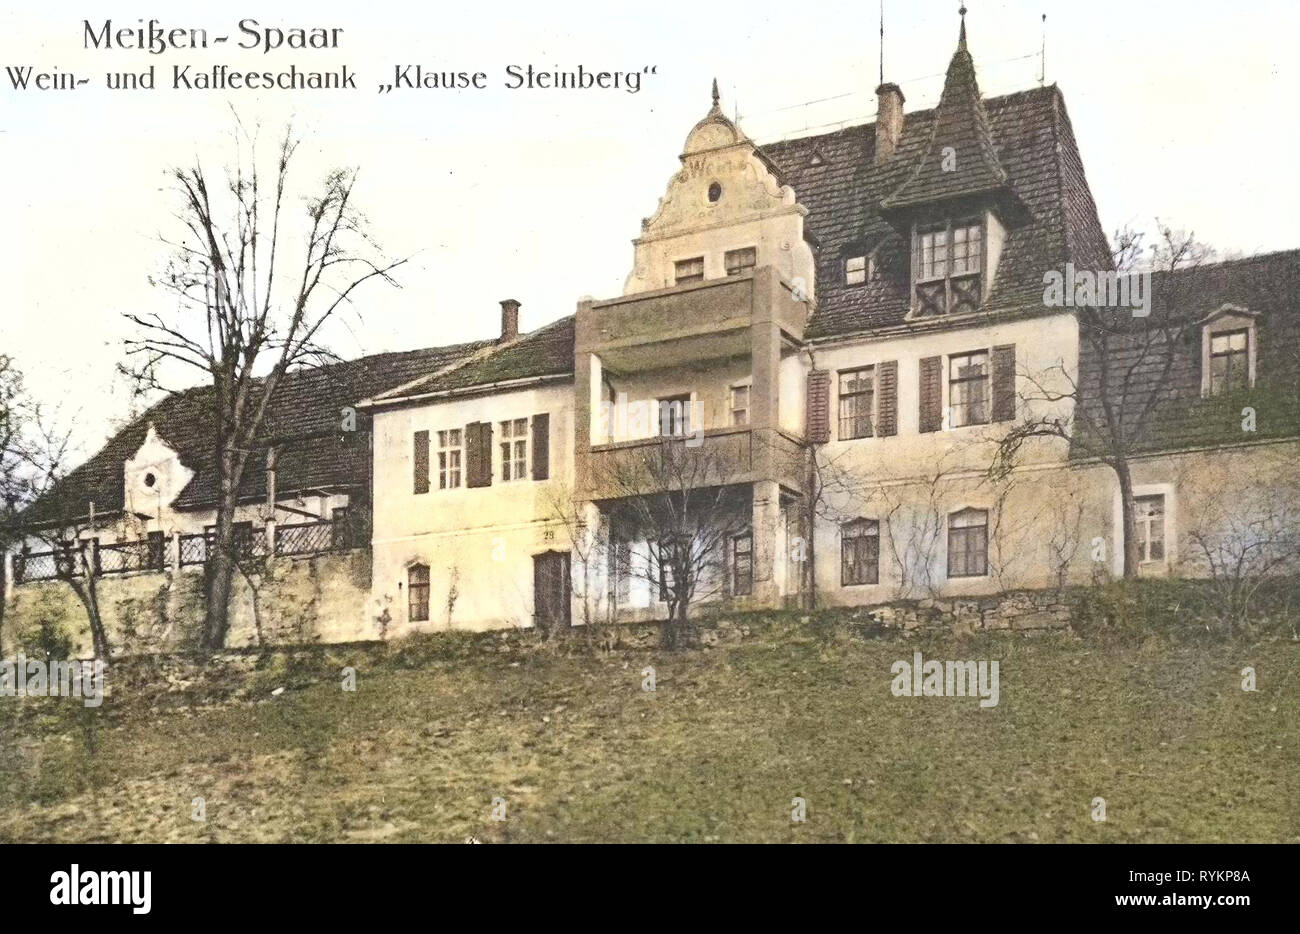 Wine taverns in Saxony, Buildings in Meißen, Cafés in Saxony, 1913, Meißen, Spaar, Wein, und Kaffeeschank Klause Steinberg, Germany Stock Photo